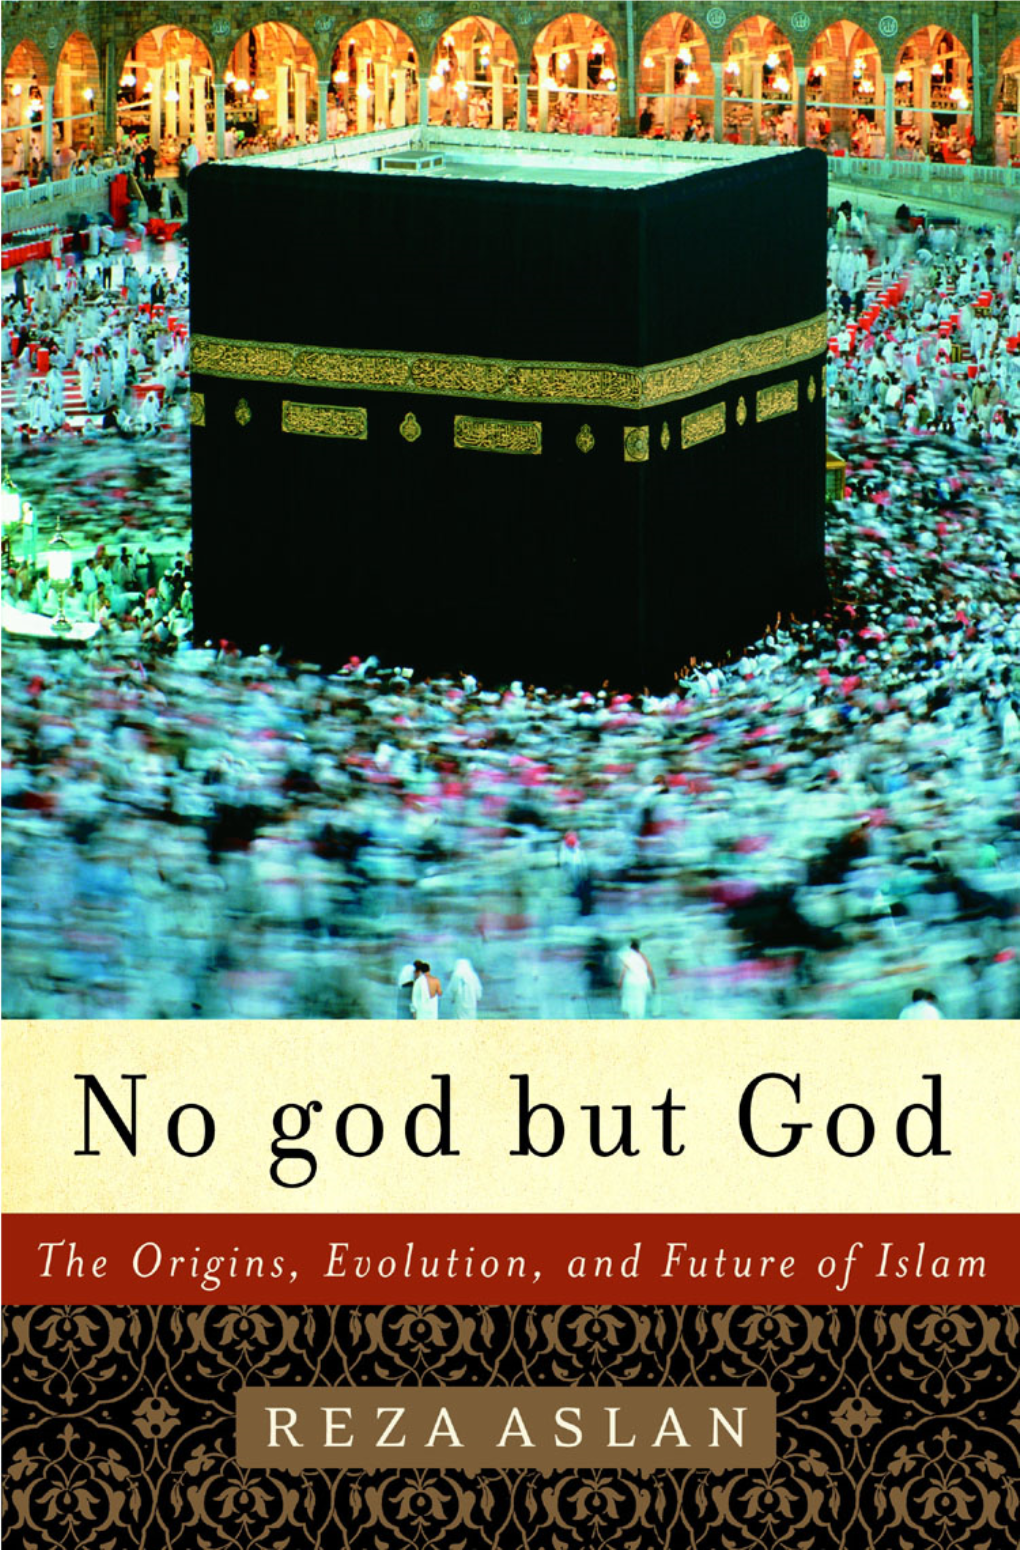 Reza Aslan-No God but God the Origins, Evolution